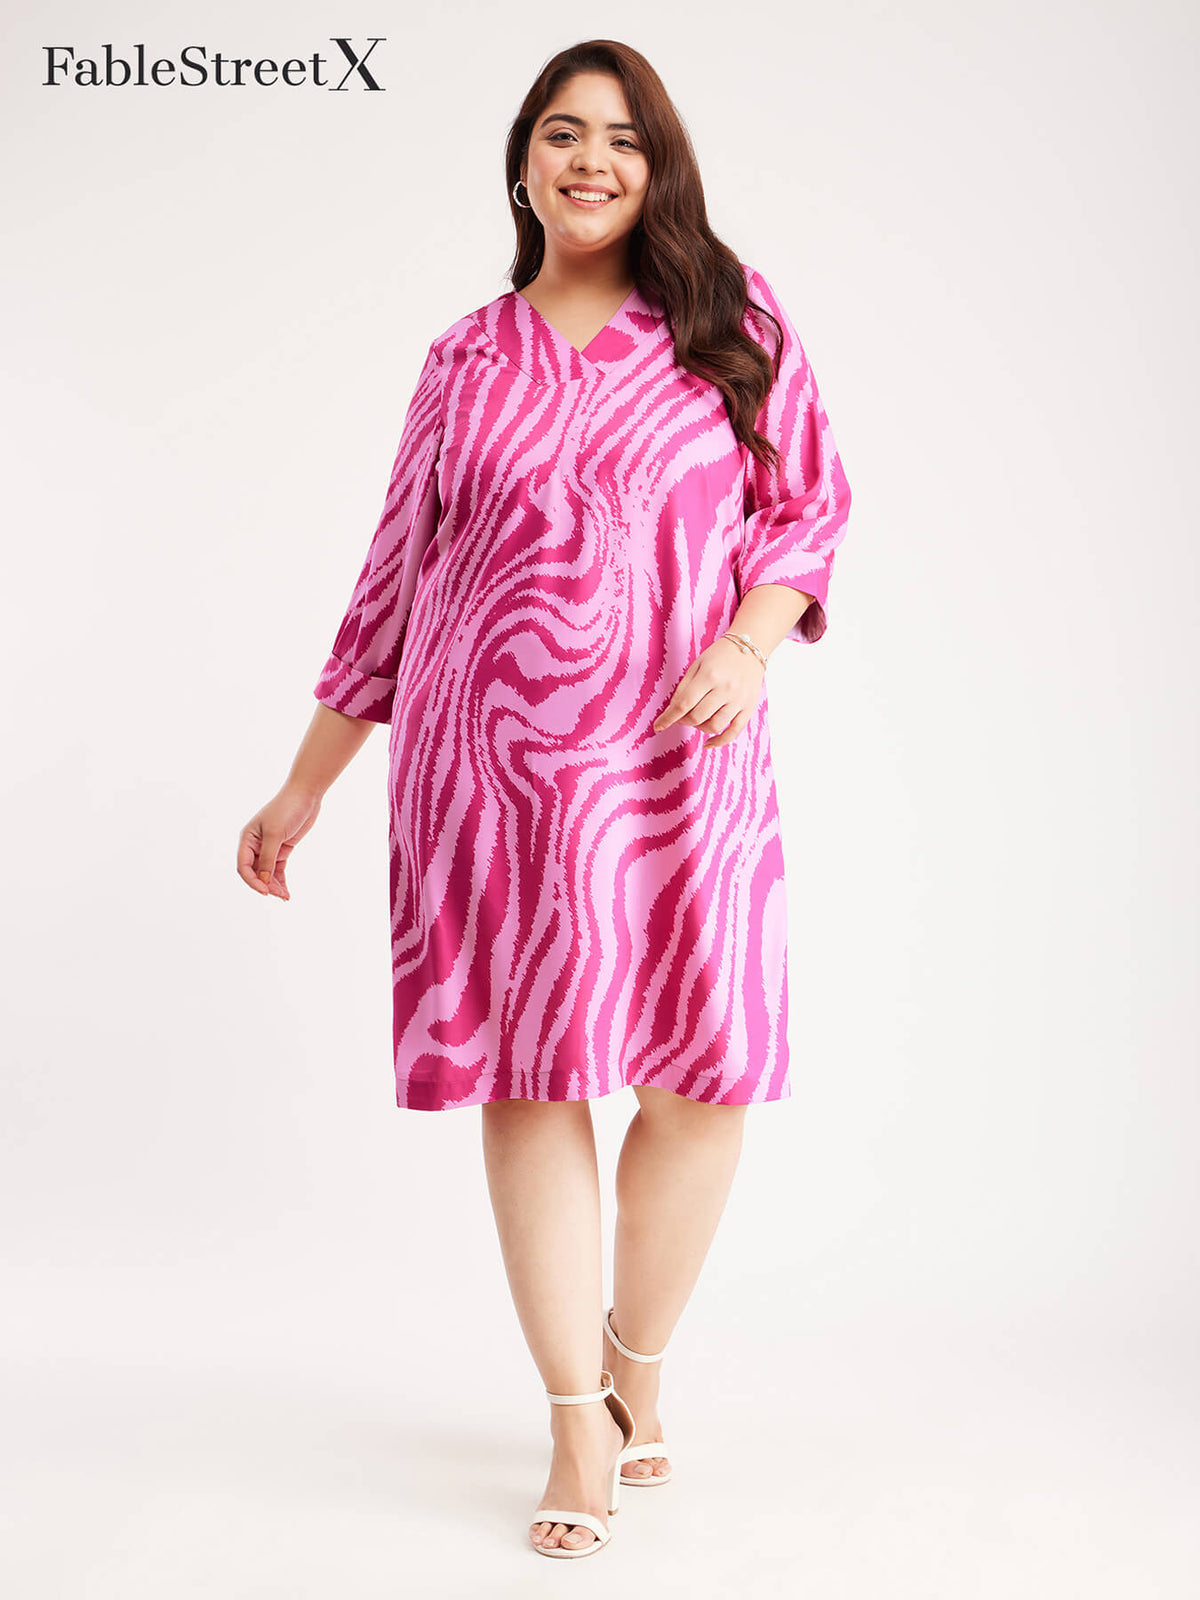 Animal Print Shift Dress - Pink